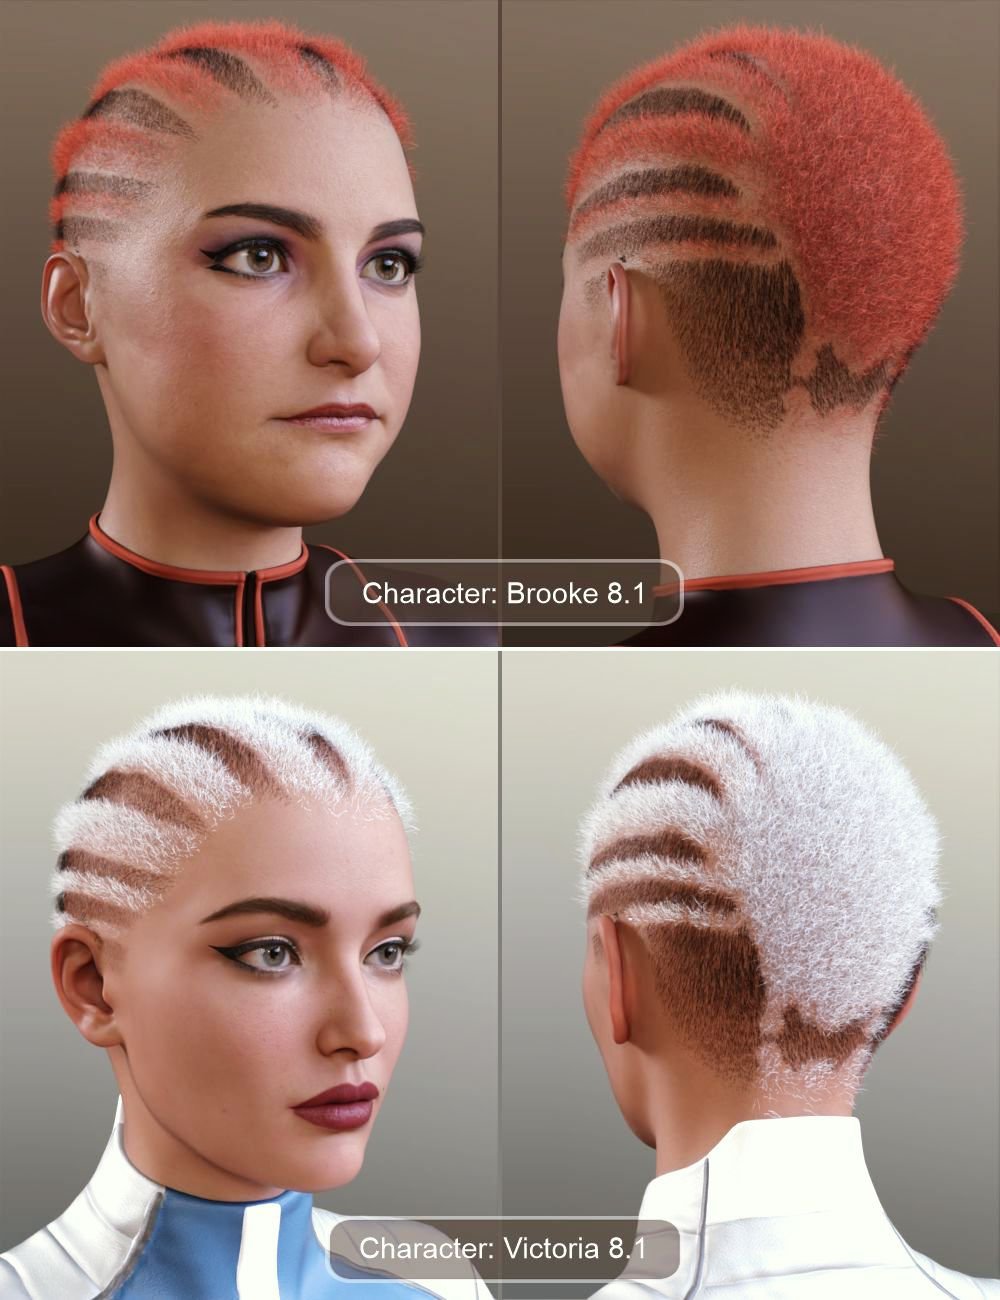 Marta Fashionable Design Hair for Genesis 8.1 Female by: AlFan, 3D Models by Daz 3D